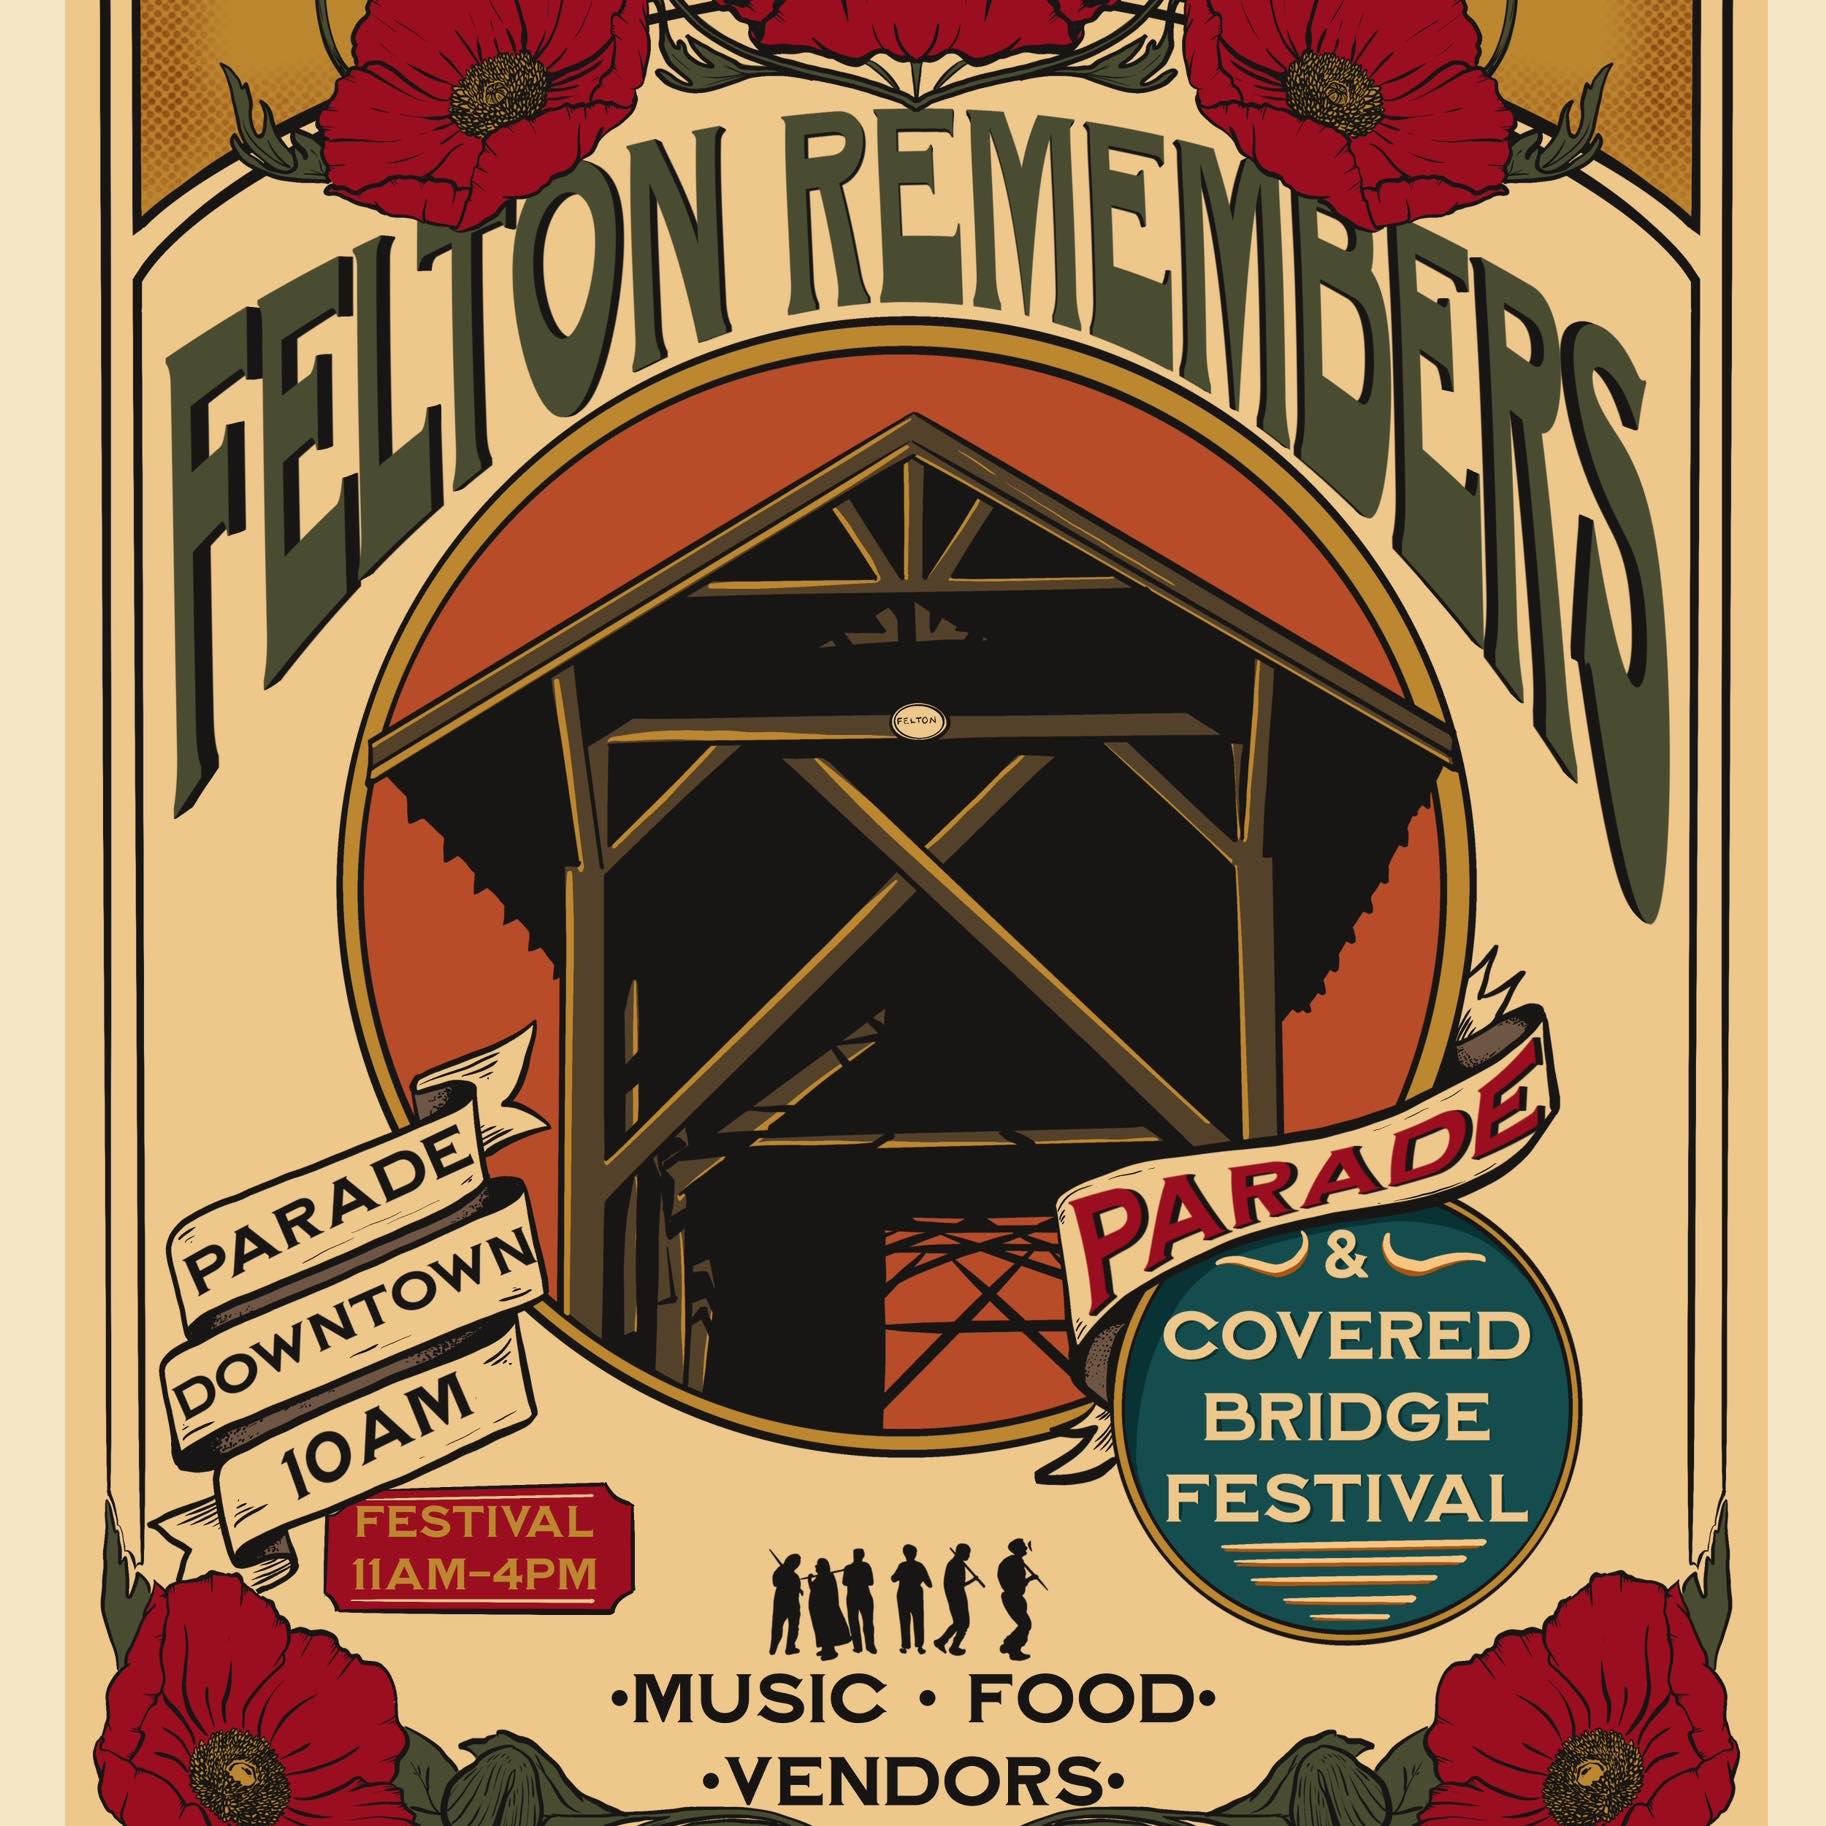 May 25th: Felton Remembers